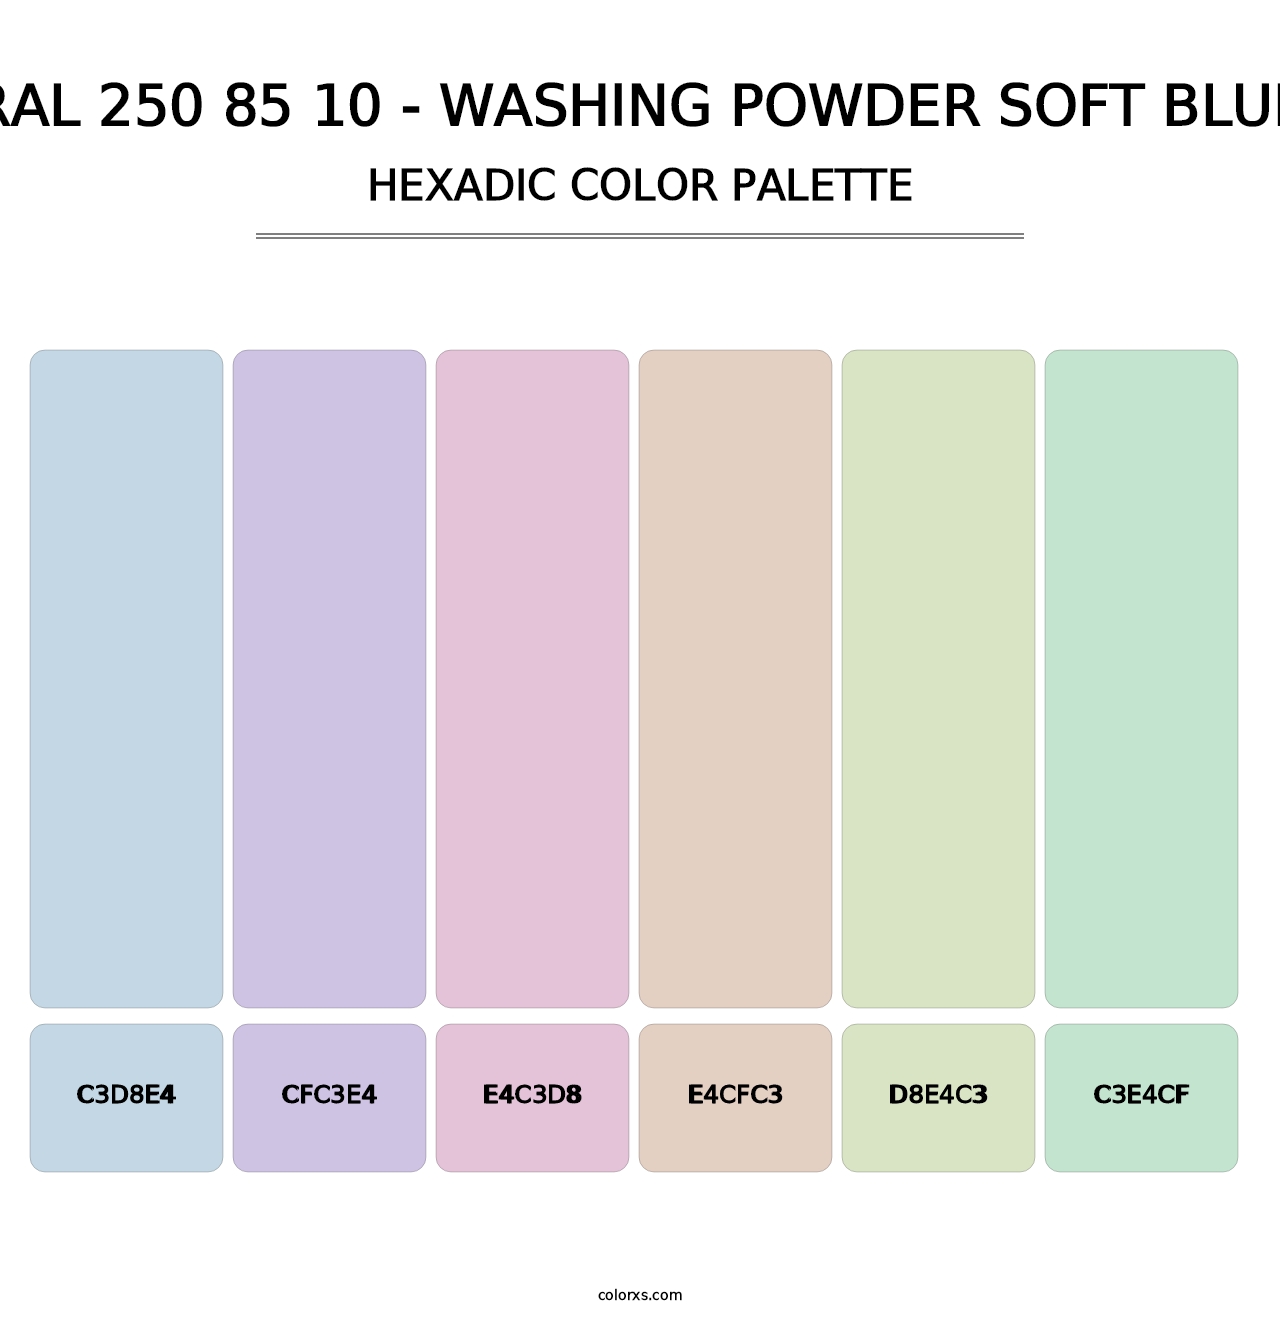 RAL 250 85 10 - Washing Powder Soft Blue - Hexadic Color Palette